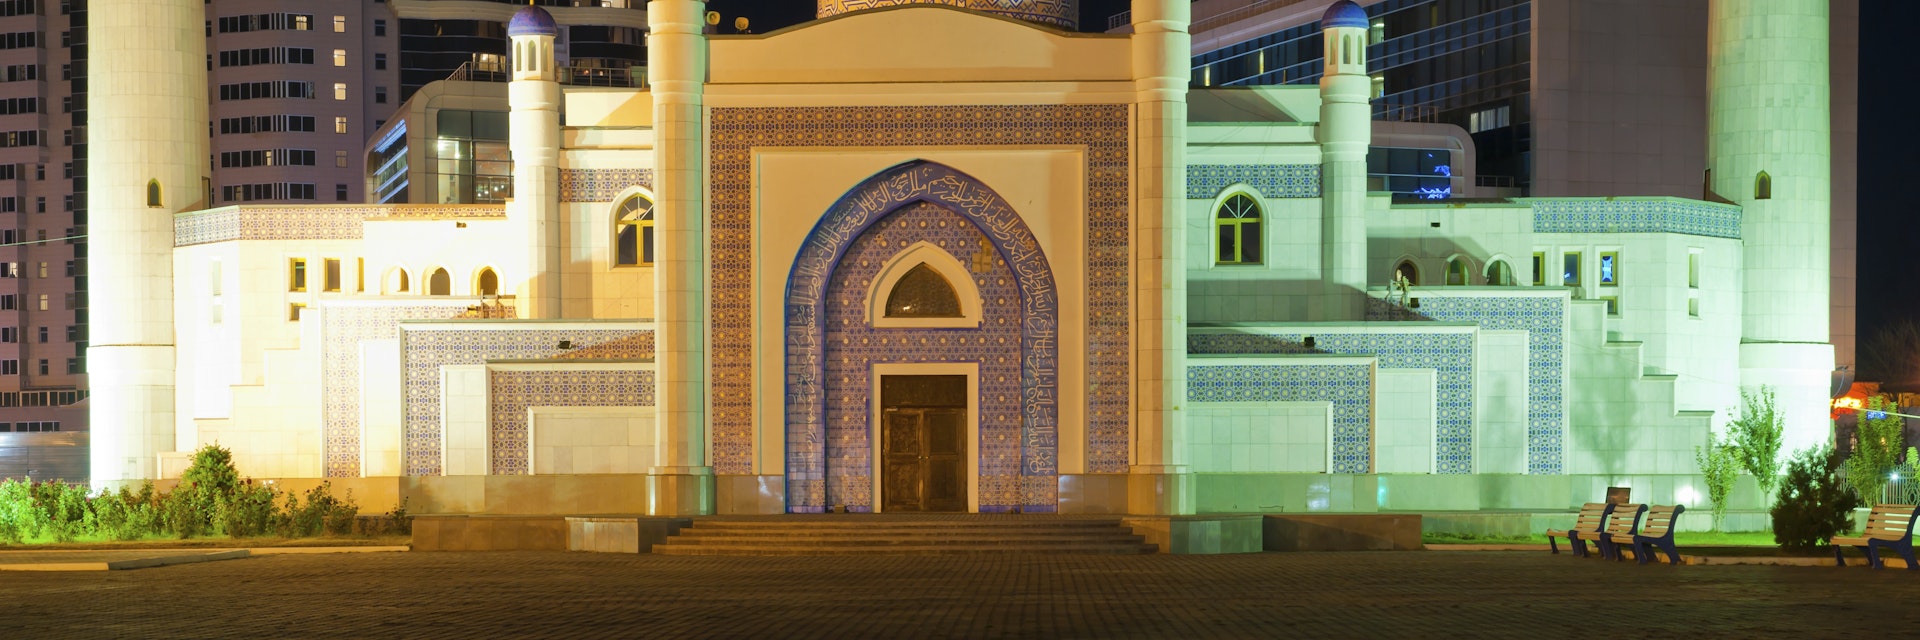 Mosque in Atyrau